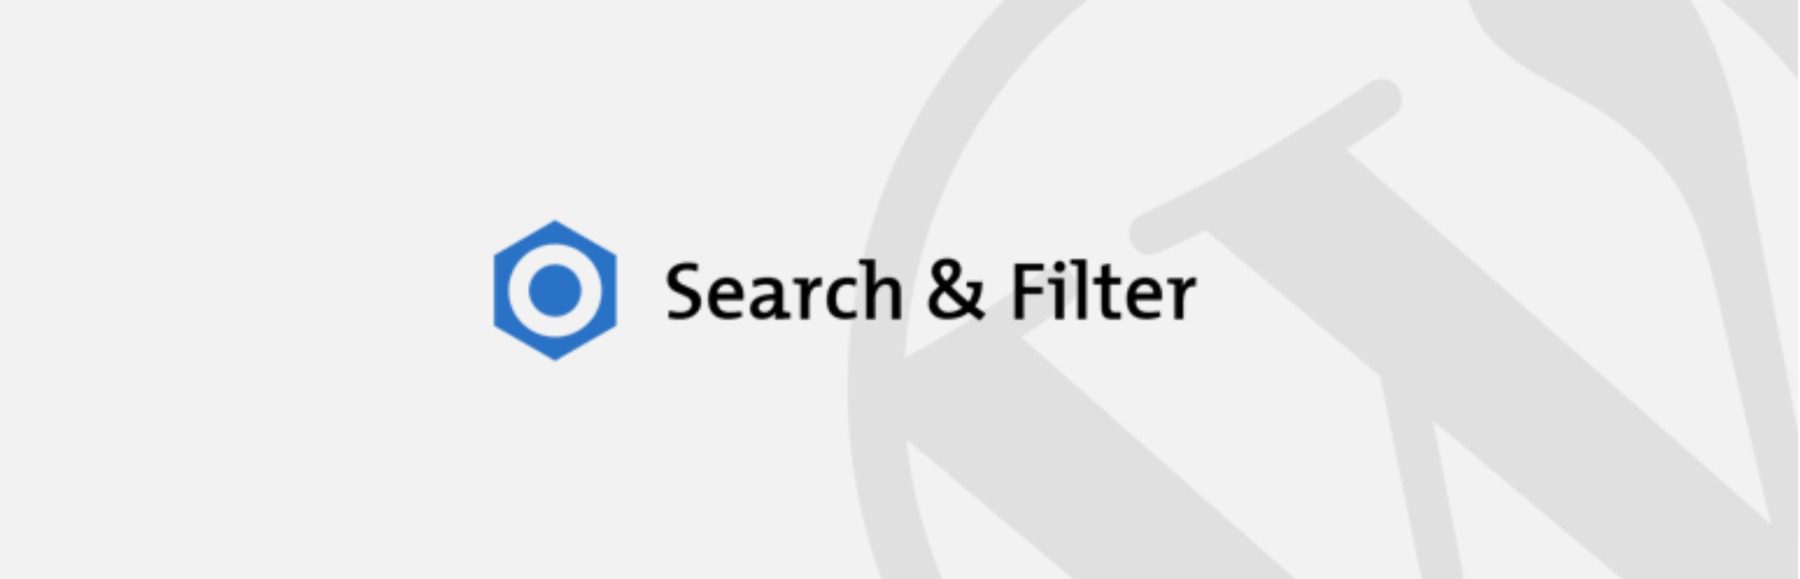 Search & Filter logo